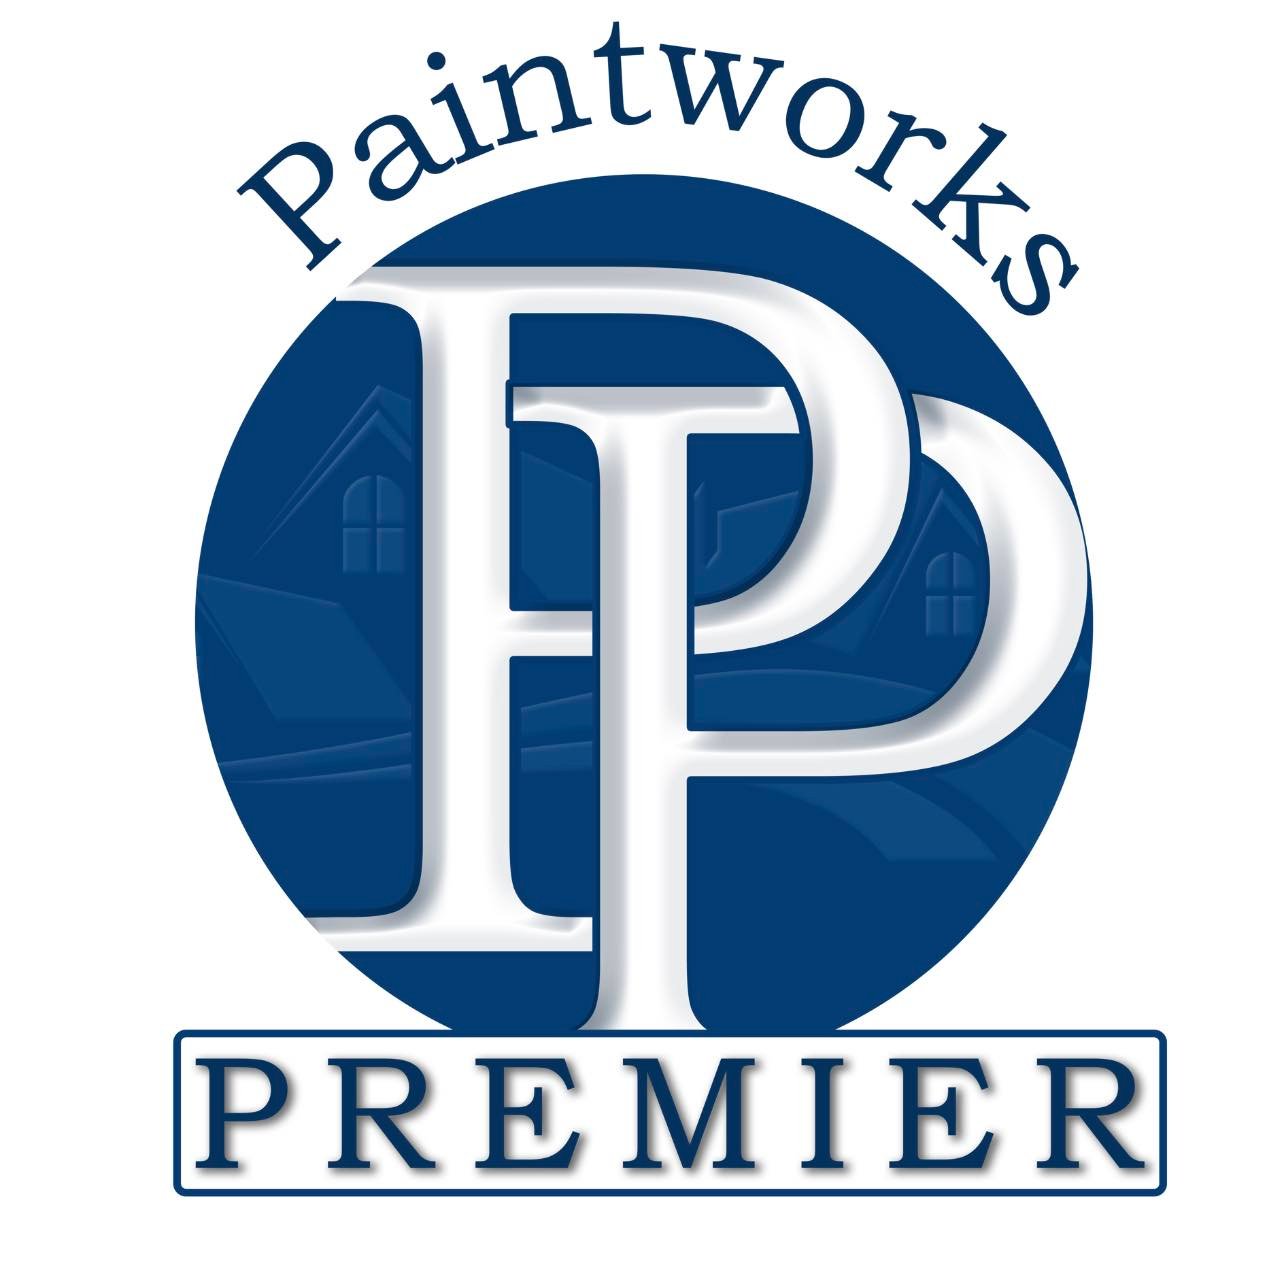 Premier Paint Works Cover Image